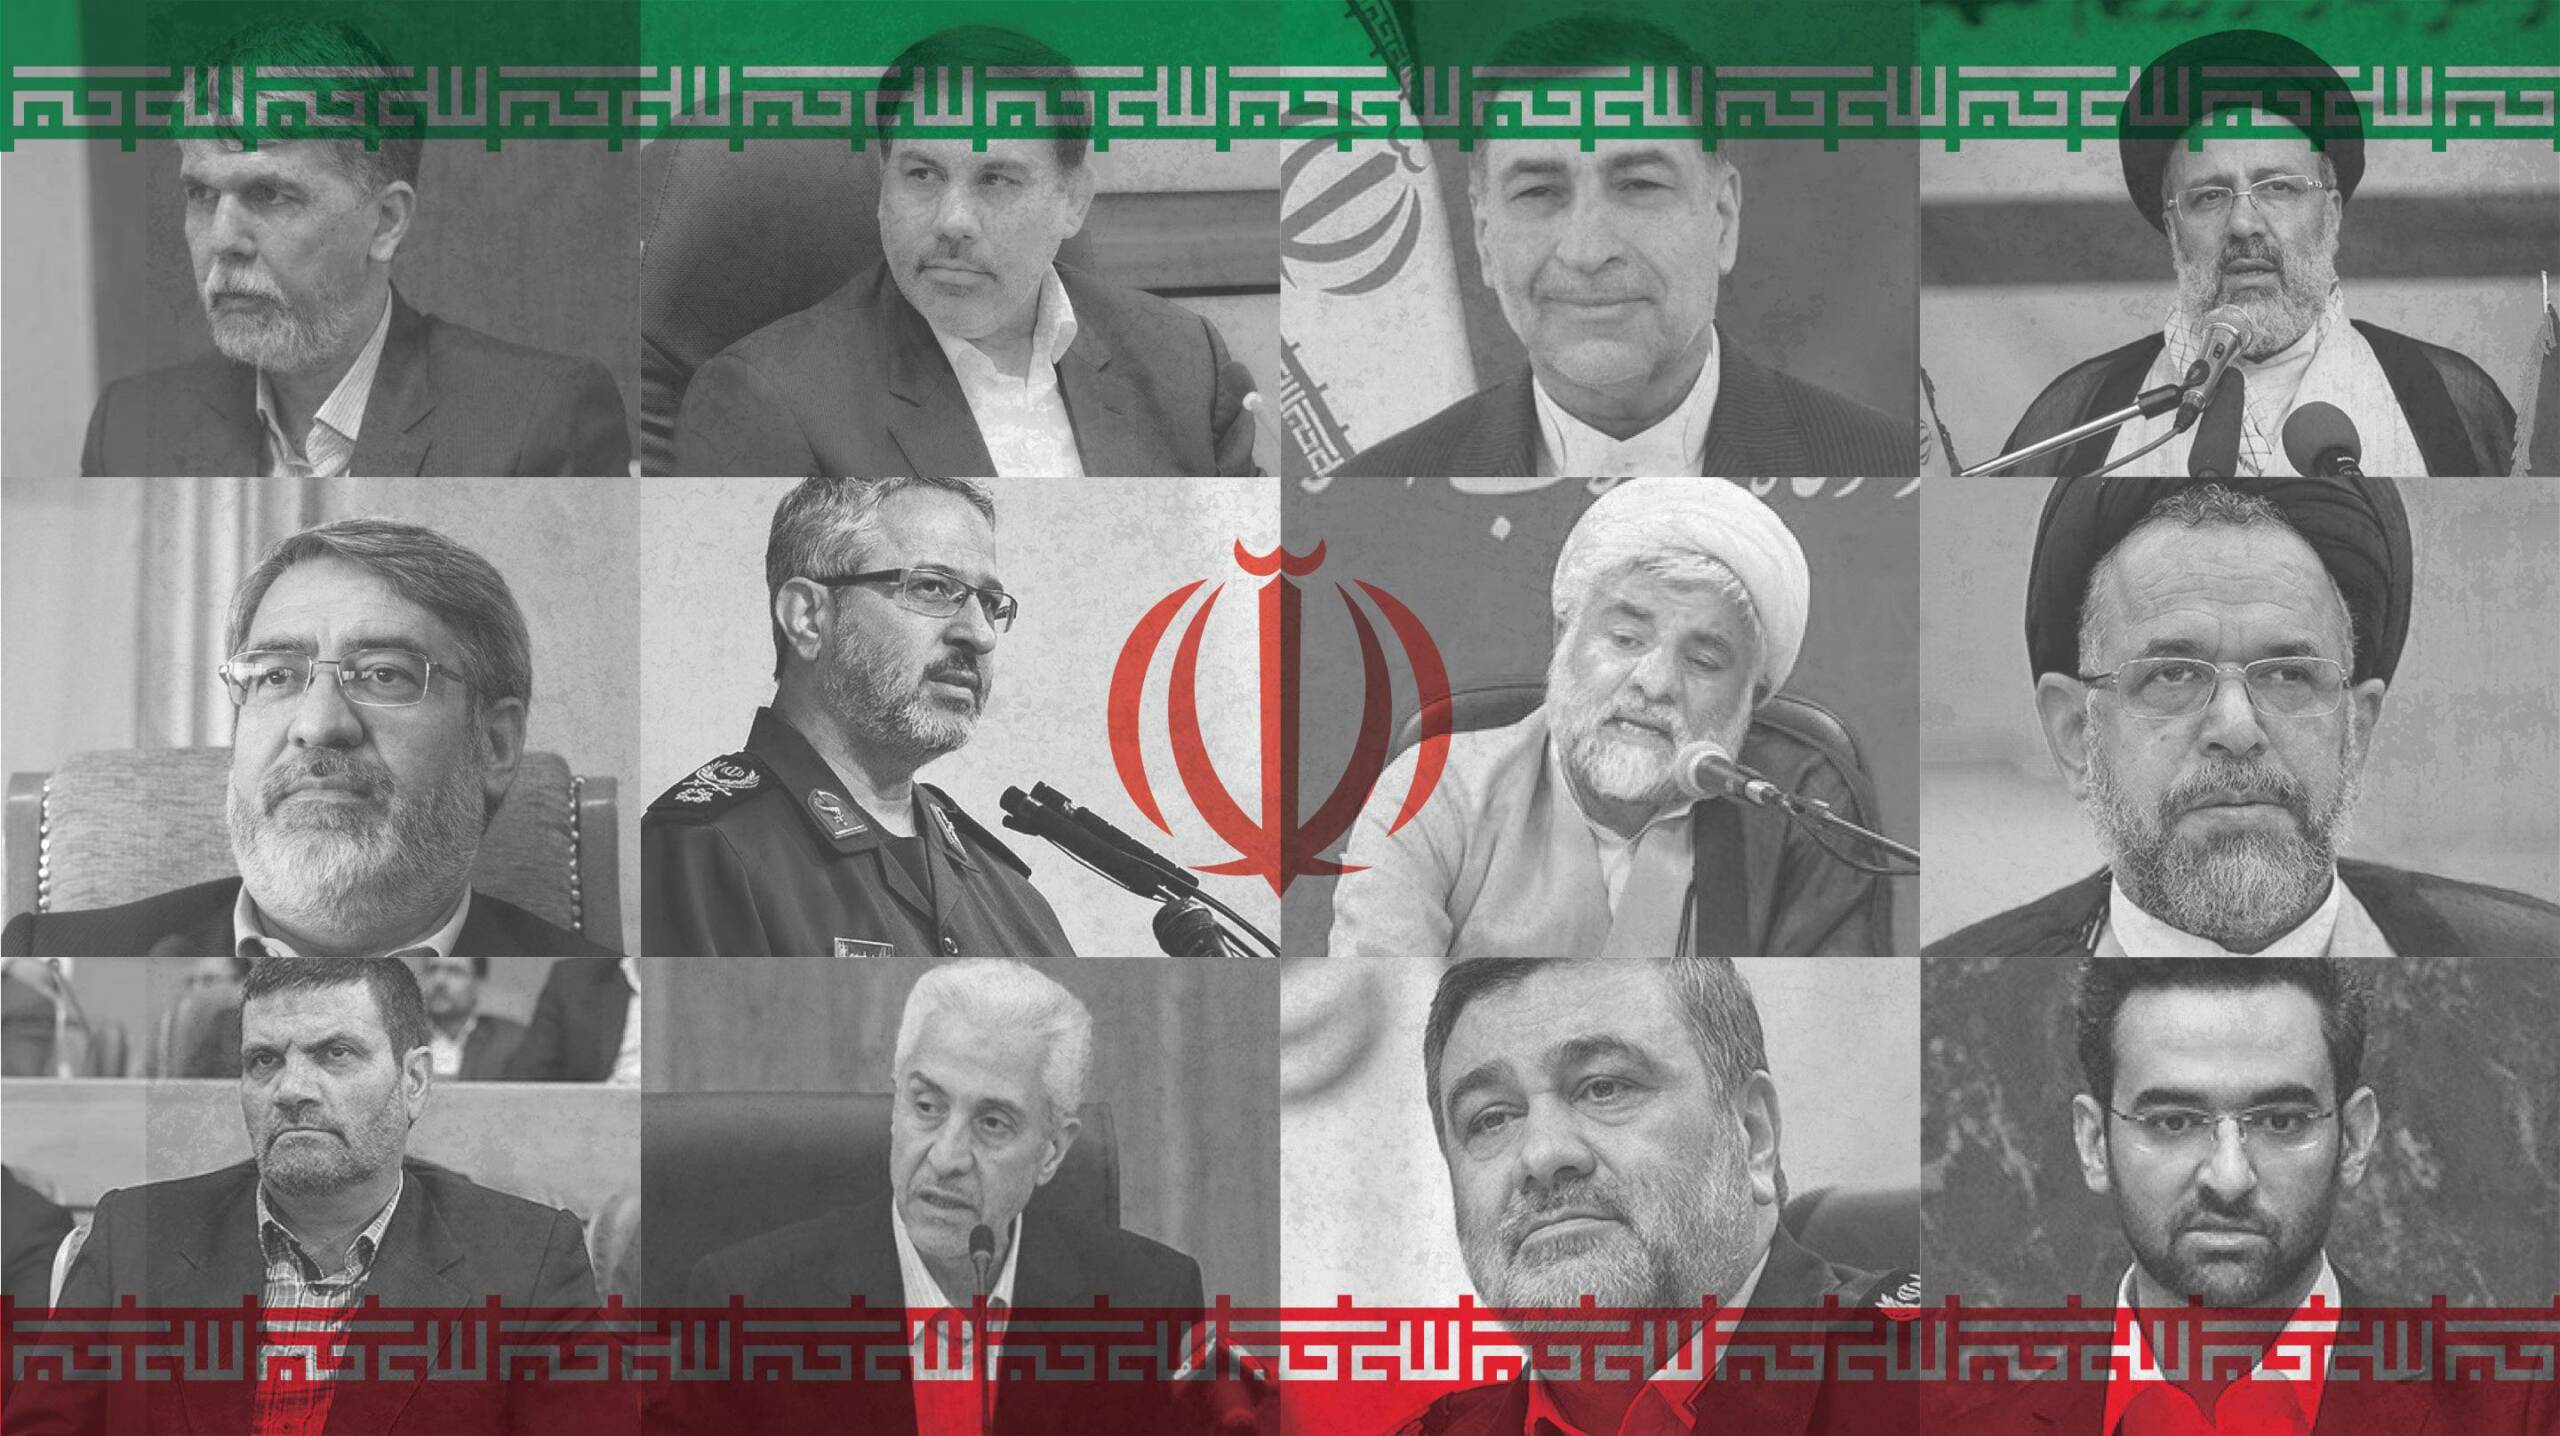 ifmat - Iran Regime faces a critical infiltration crisis